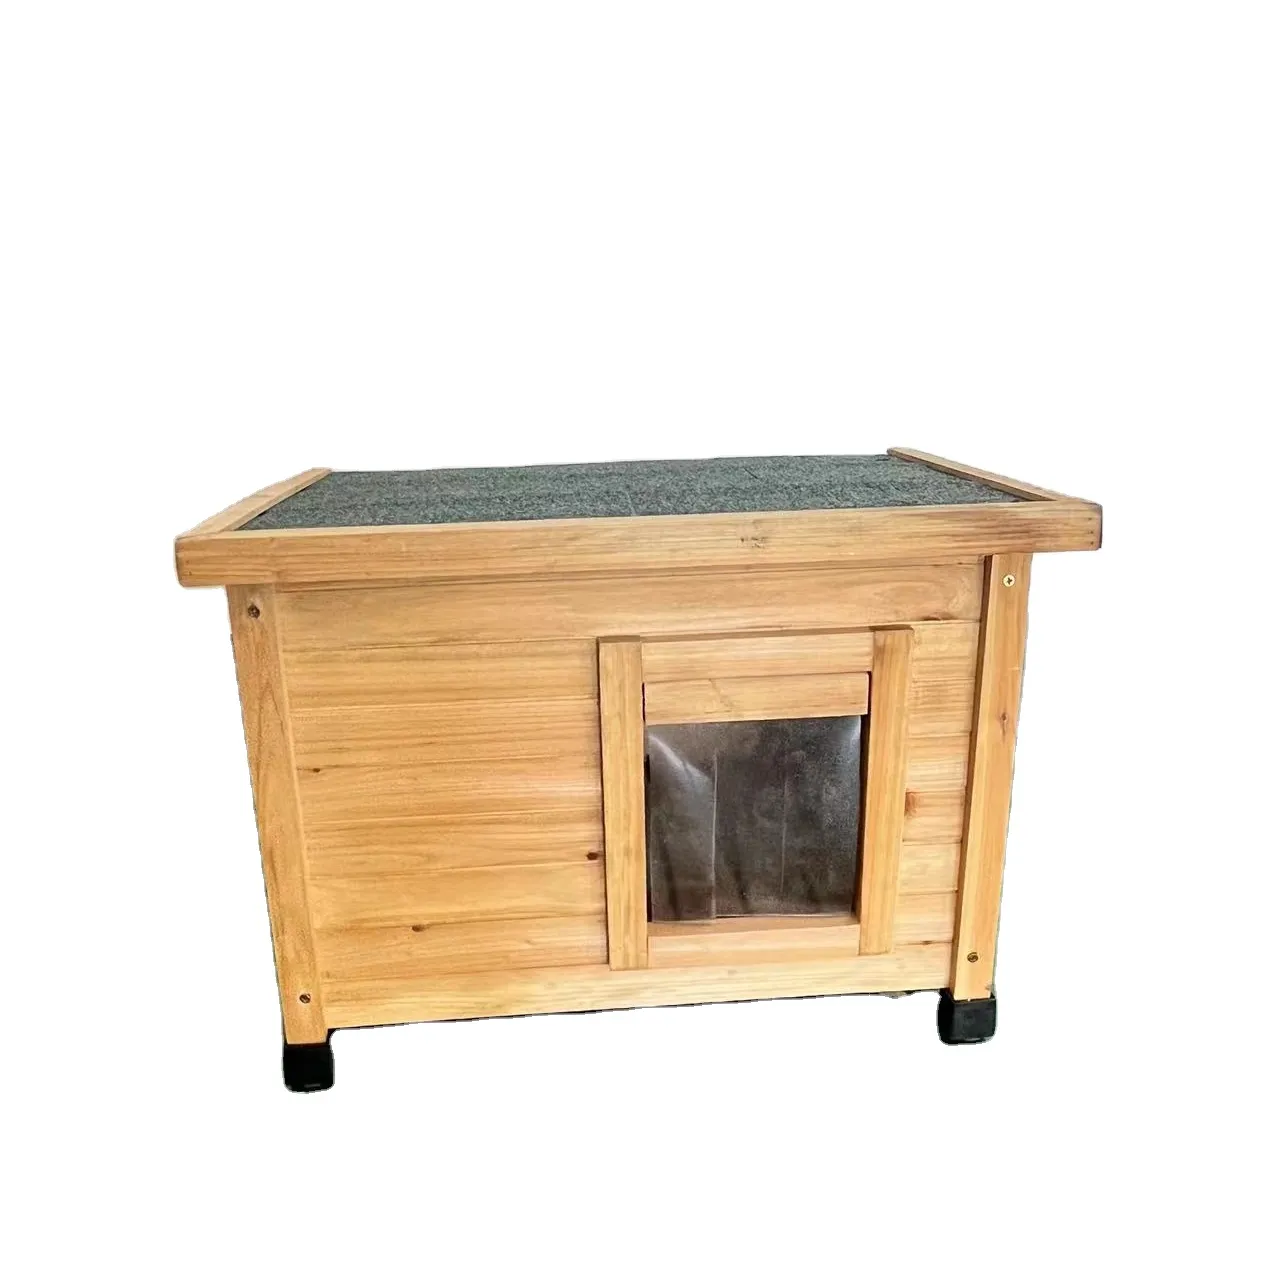 mini window design outdoor wooden waterproof pet house cat nest house Dog Nest small animal house